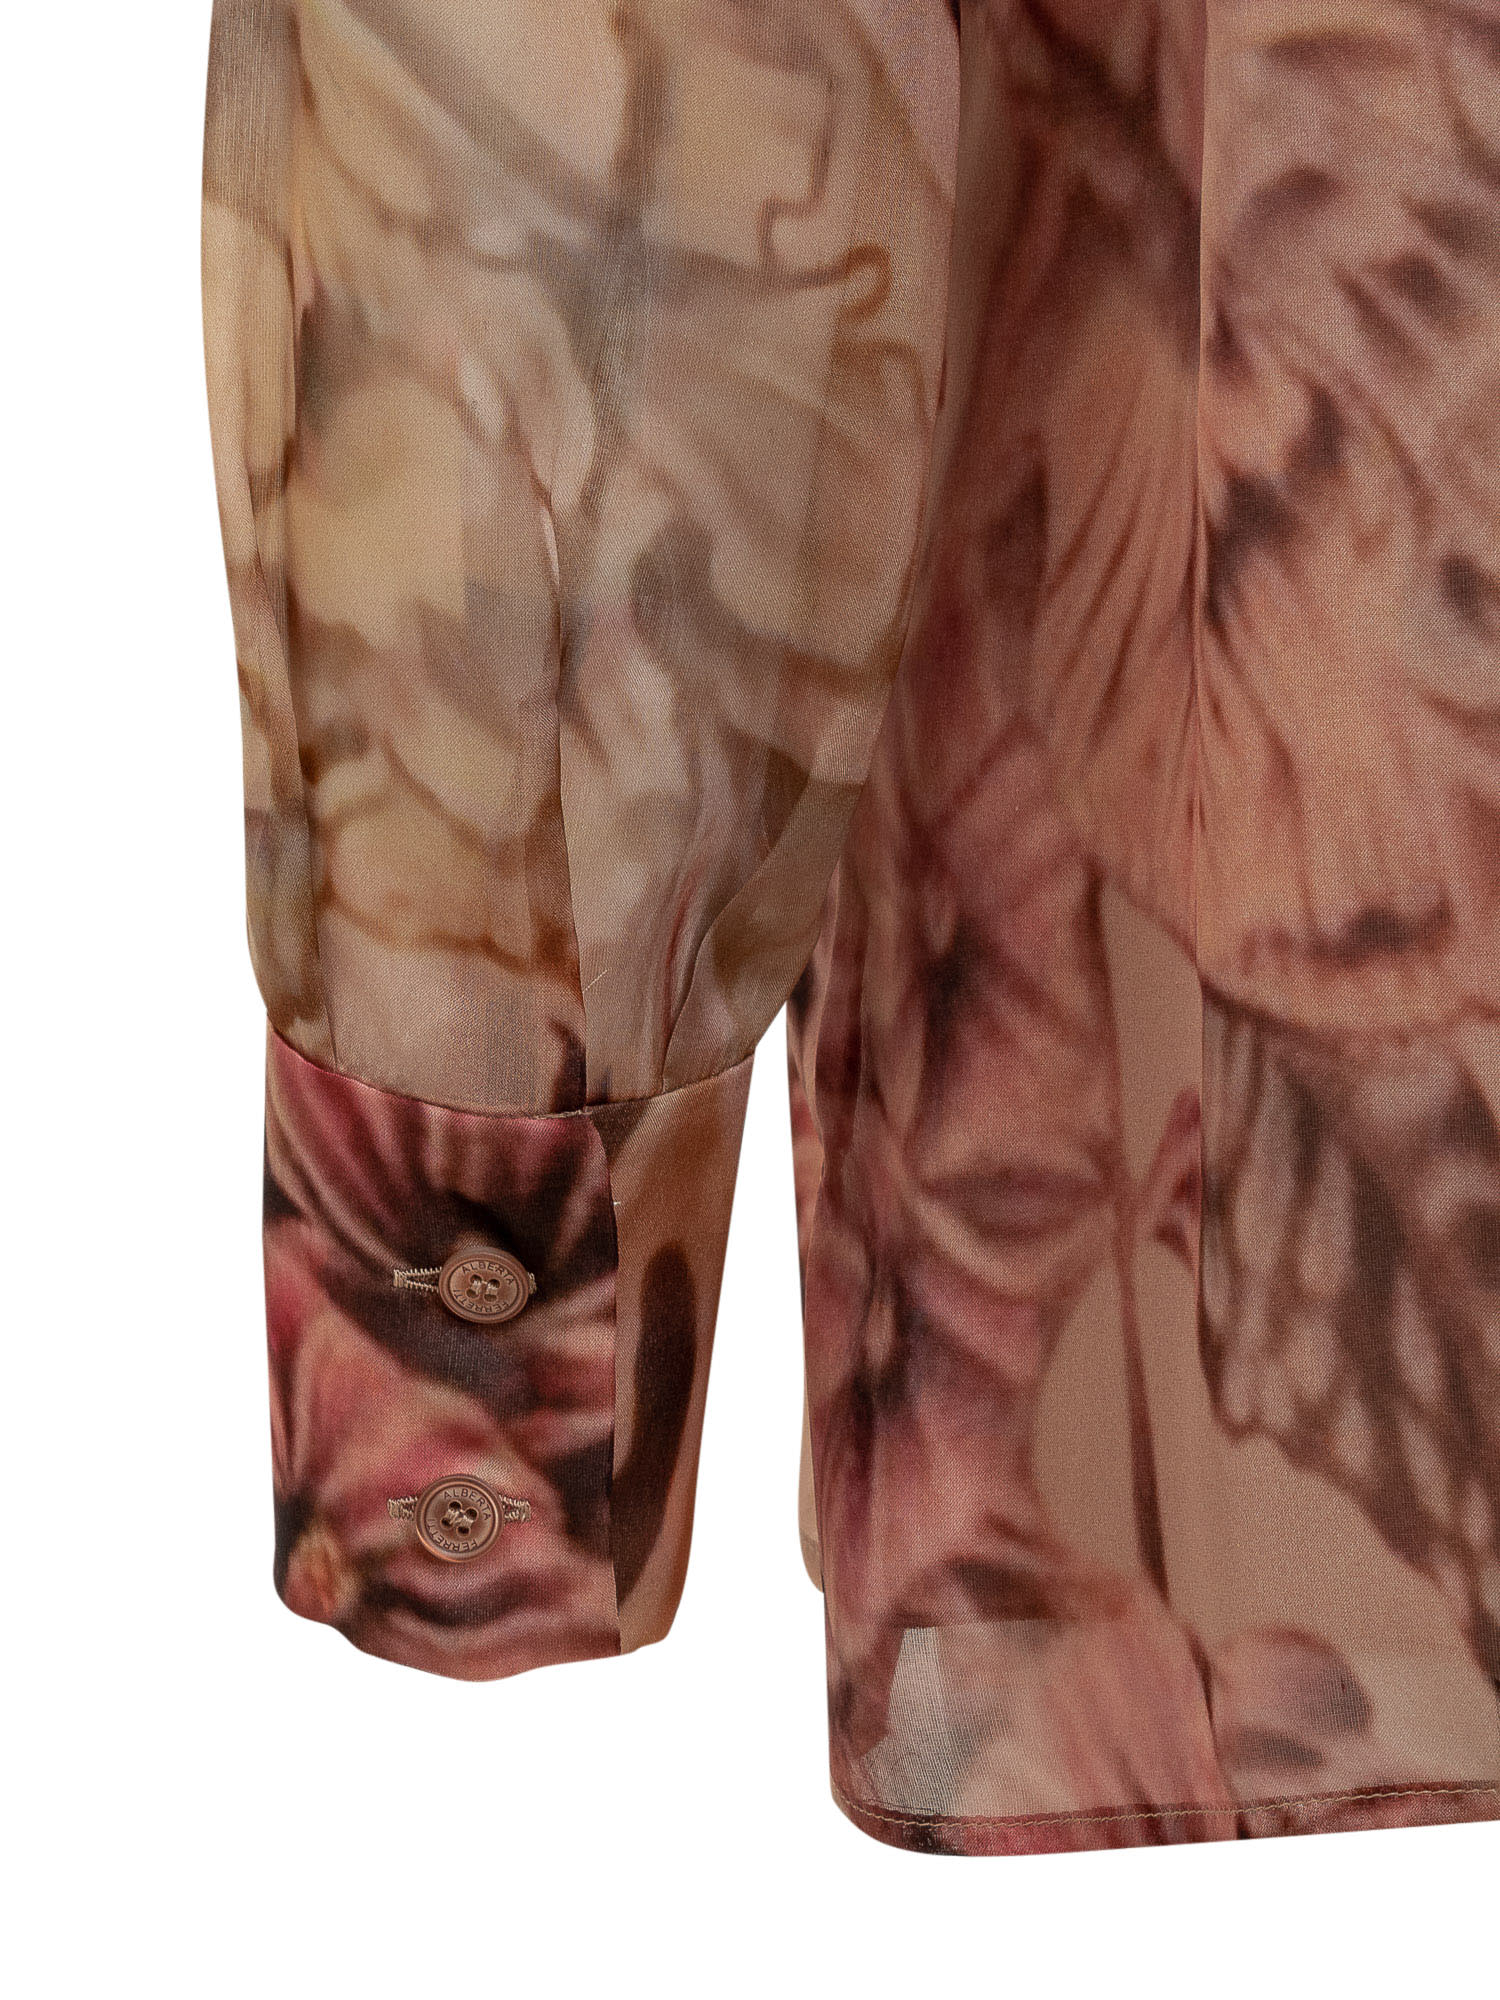 Shop Alberta Ferretti Silk Shirt With Floral Print In Fantasia Rosa